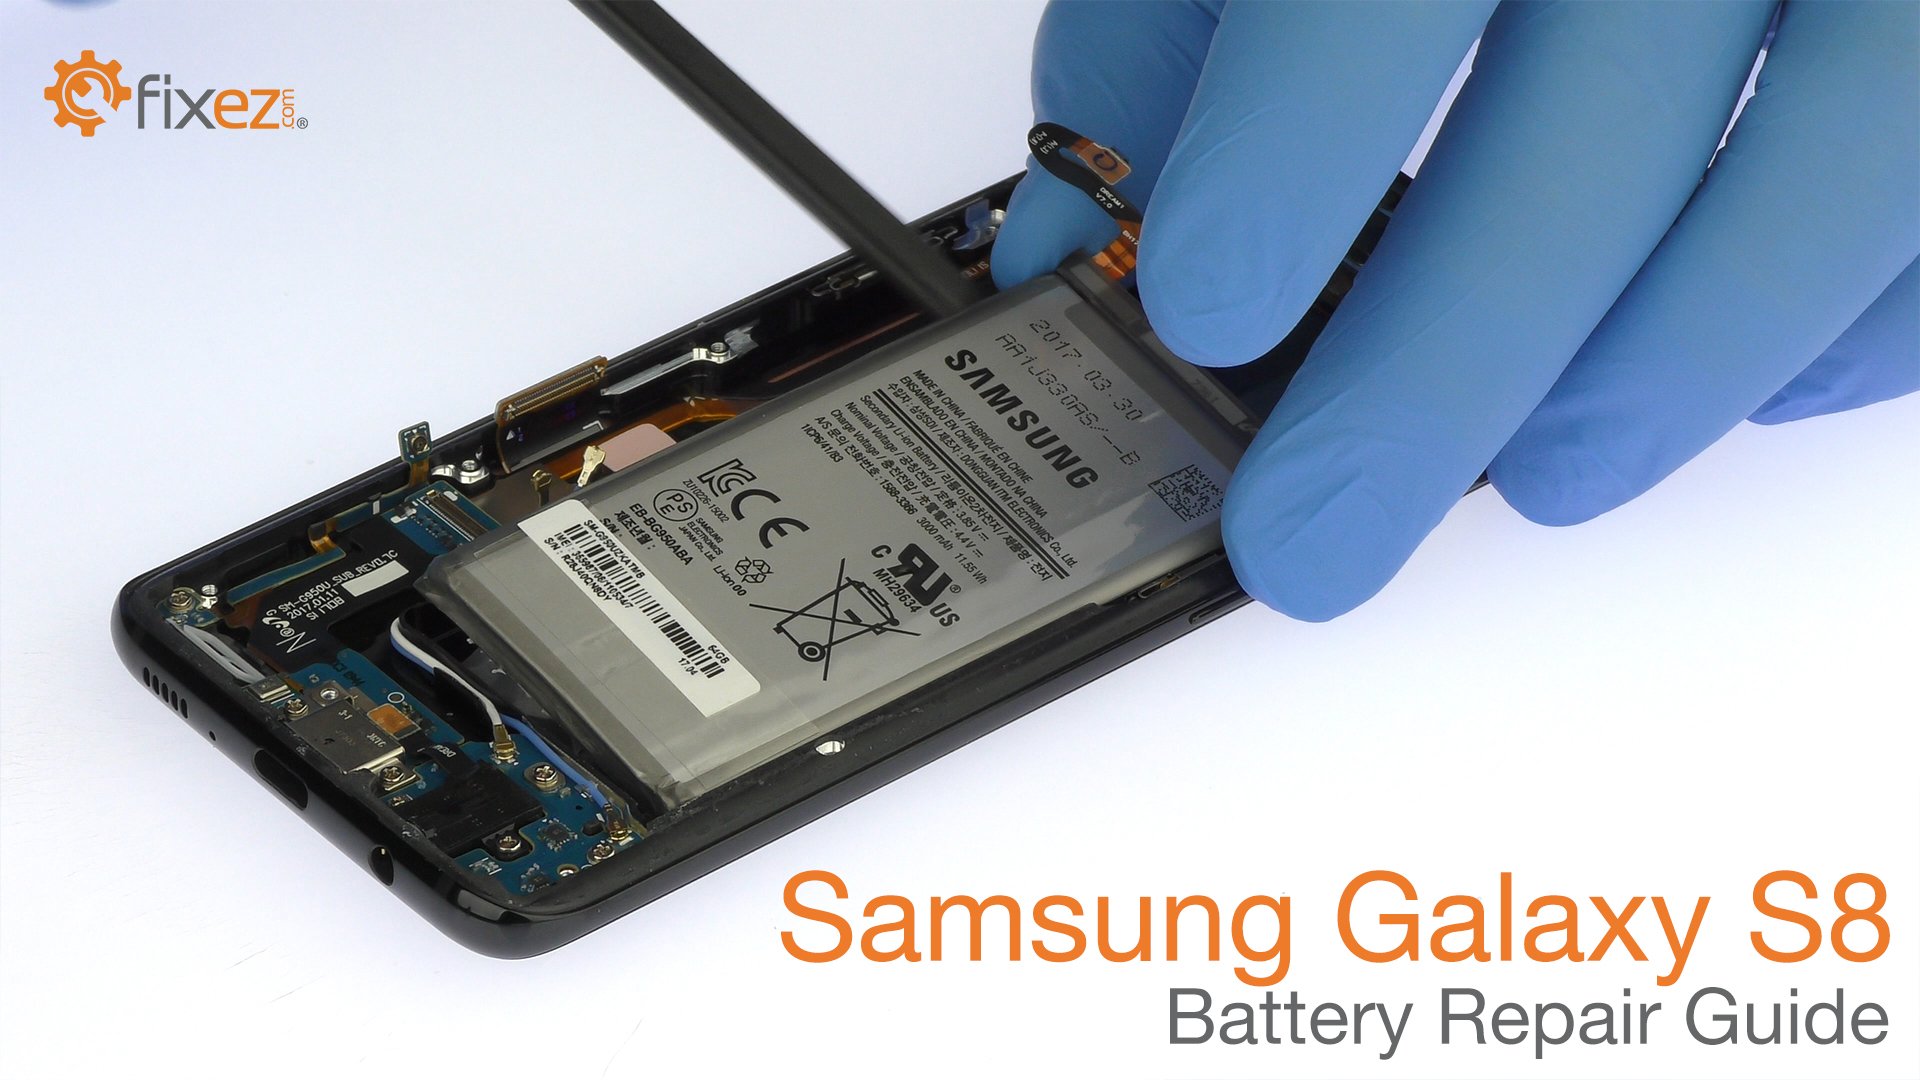 Samsung Galaxy S8 Battery Repair